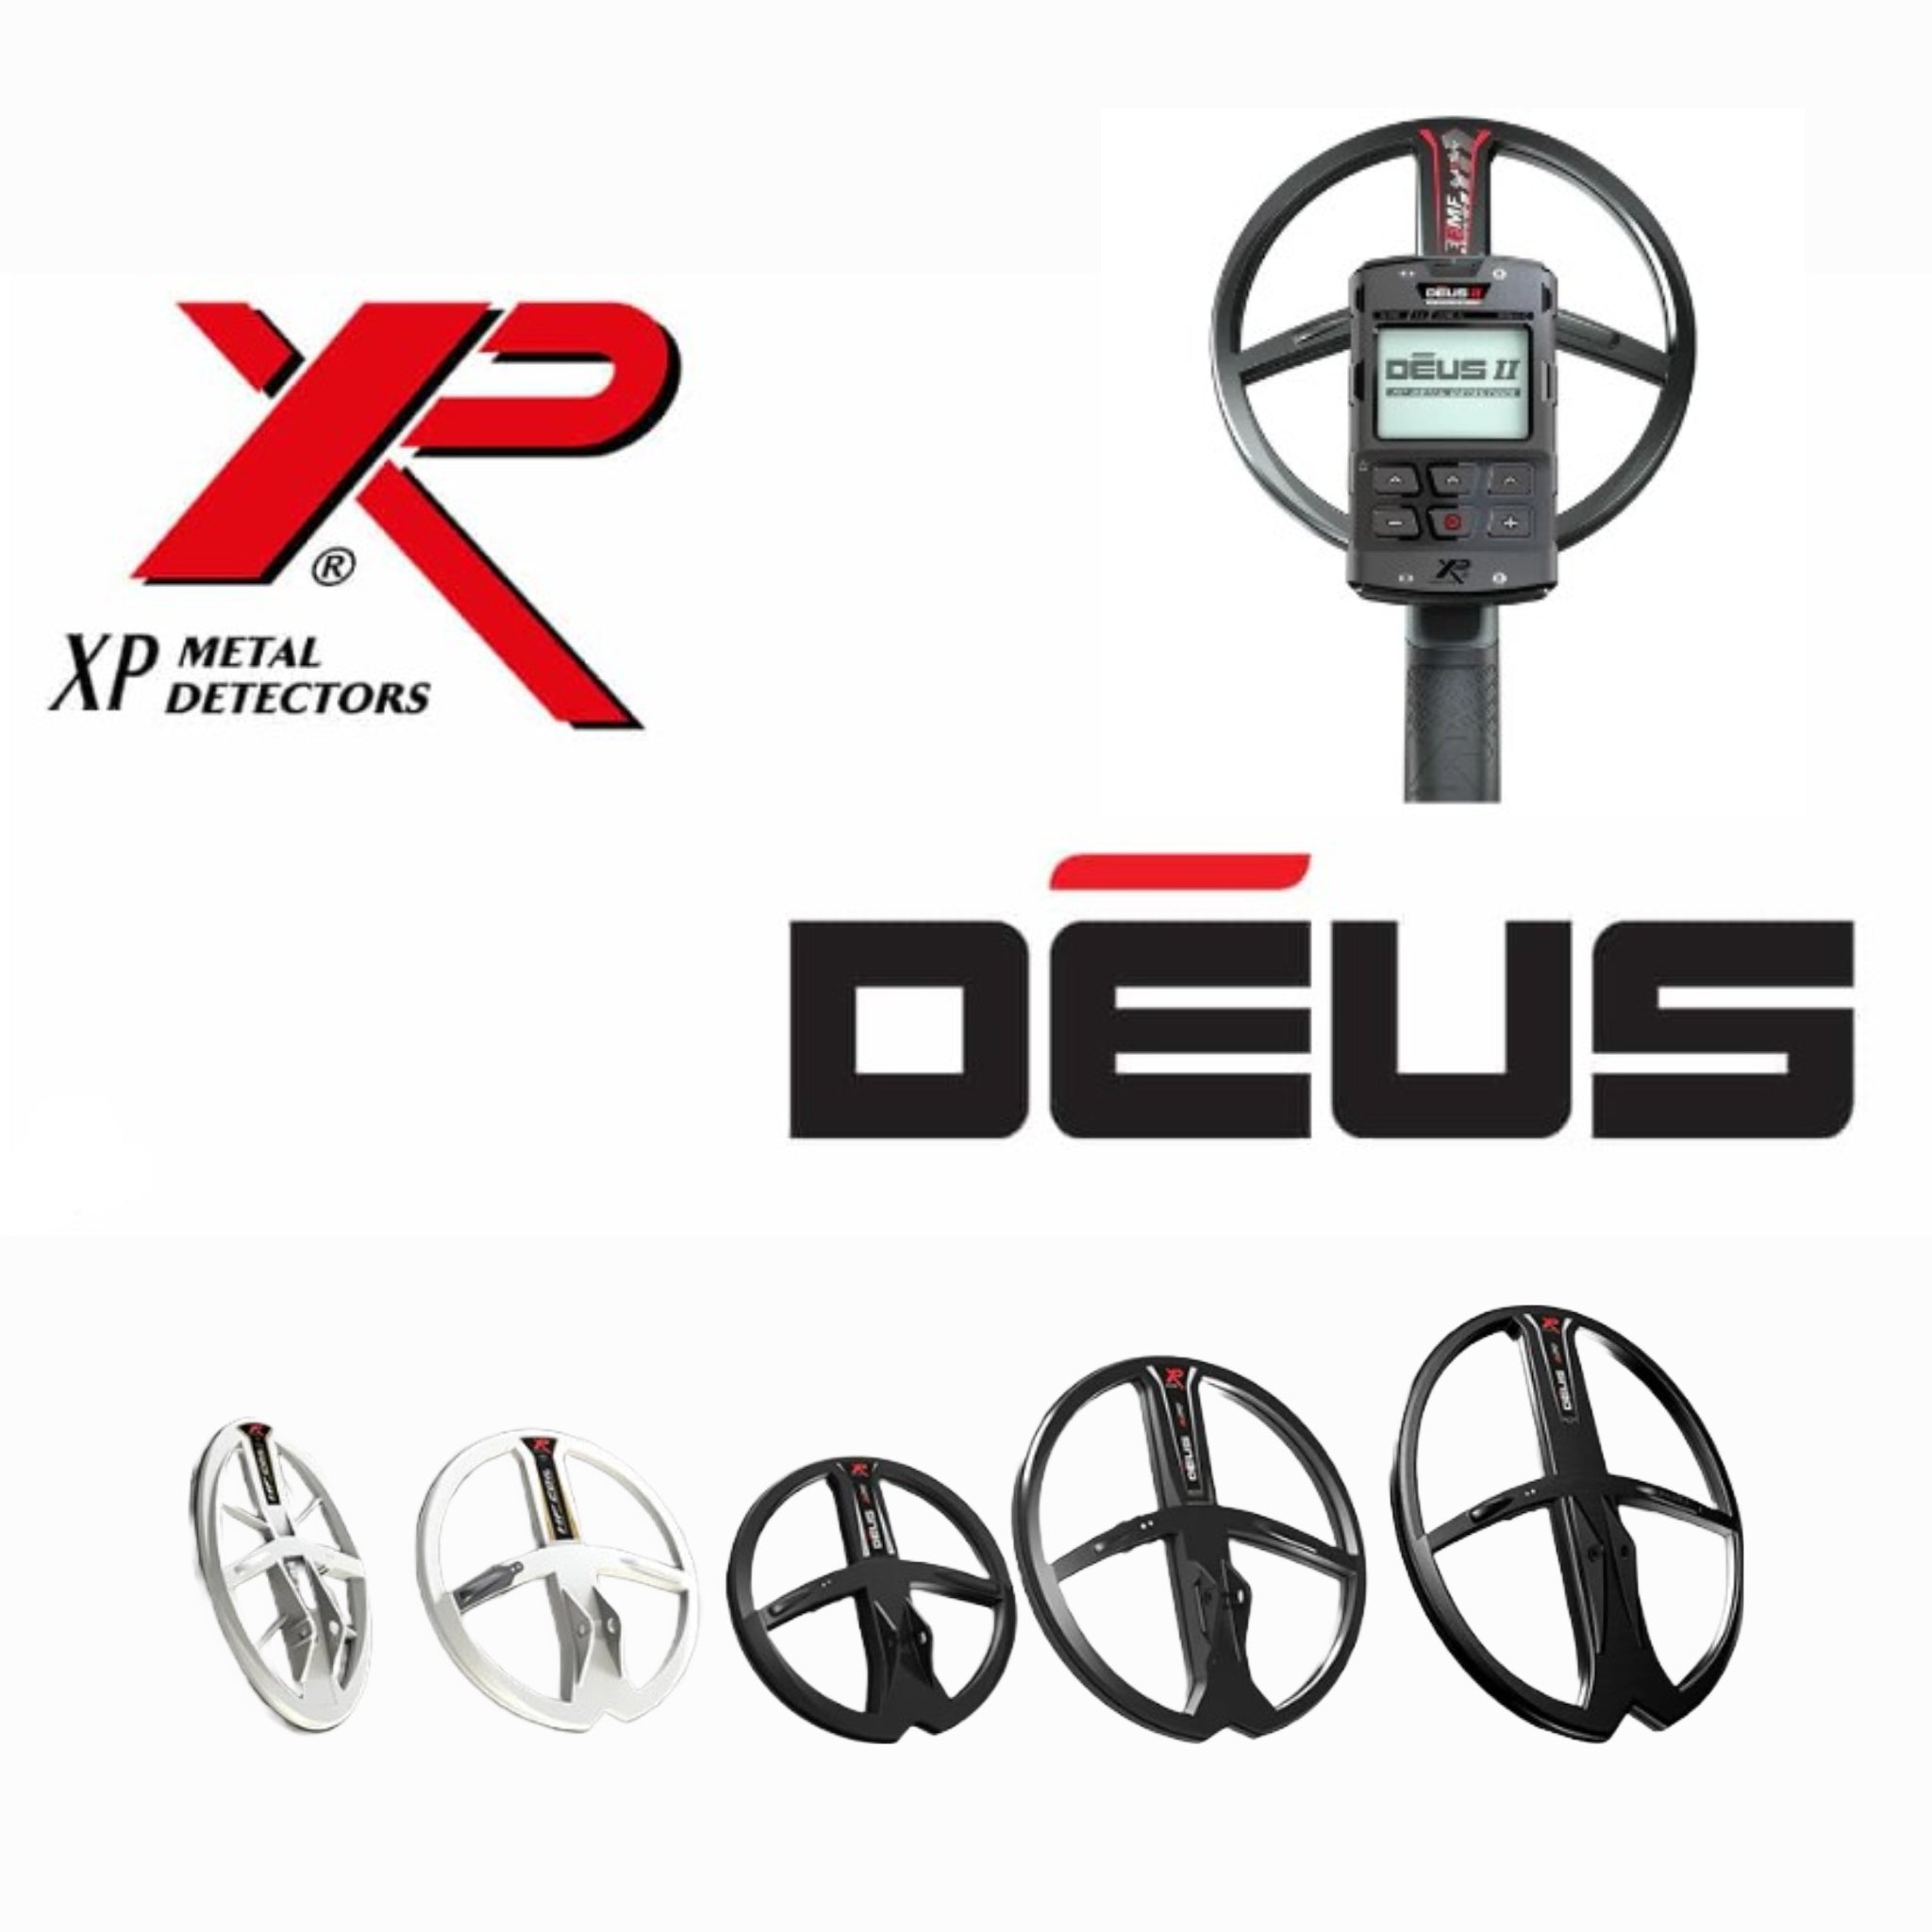 Dues II Detectors and accessories